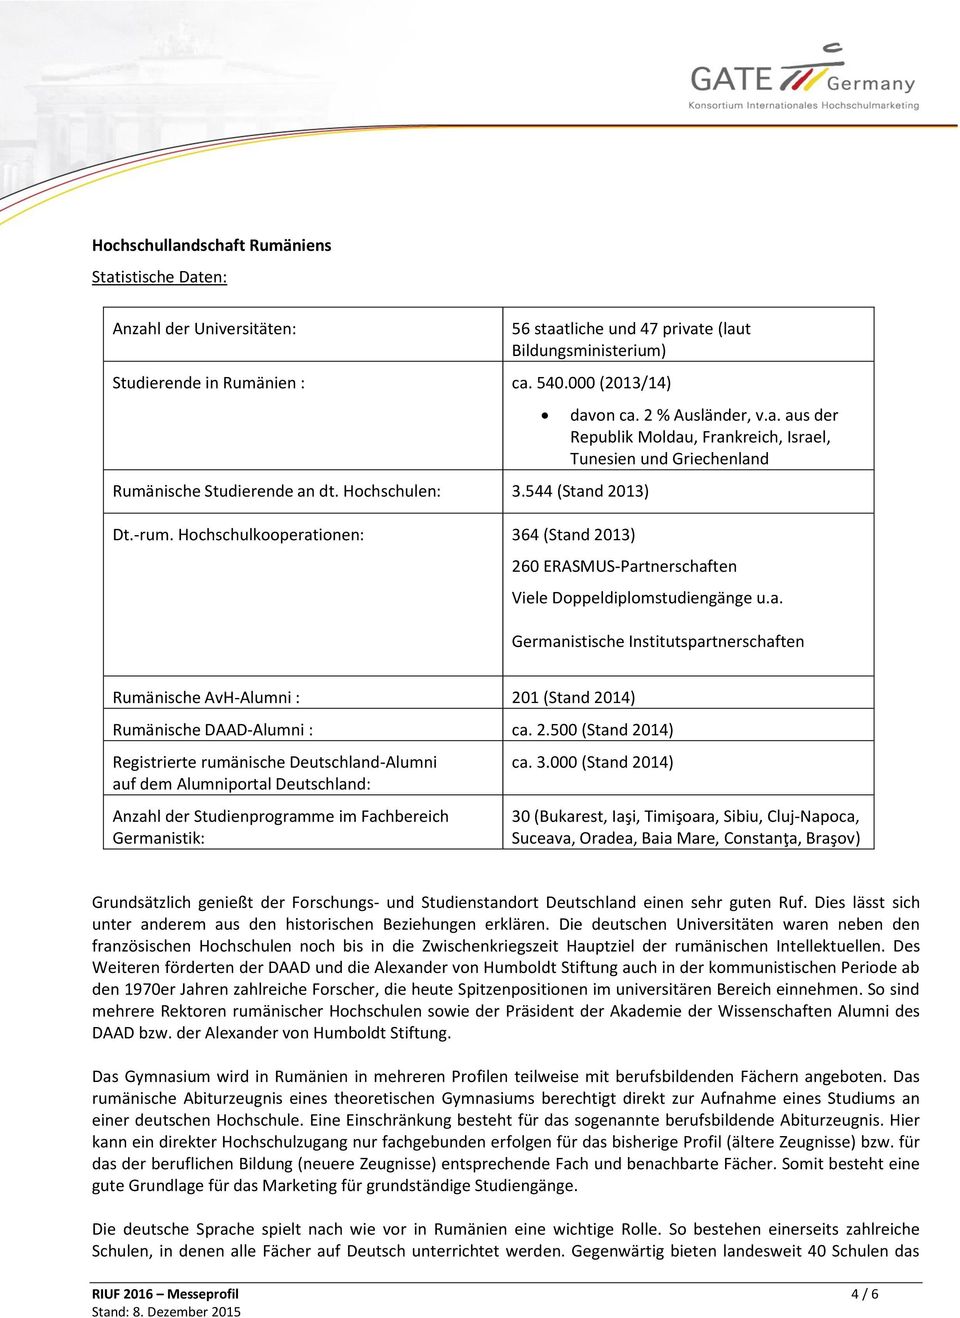 a. Germanistische Institutspartnerschaften Rumänische AvH-Alumni : 20